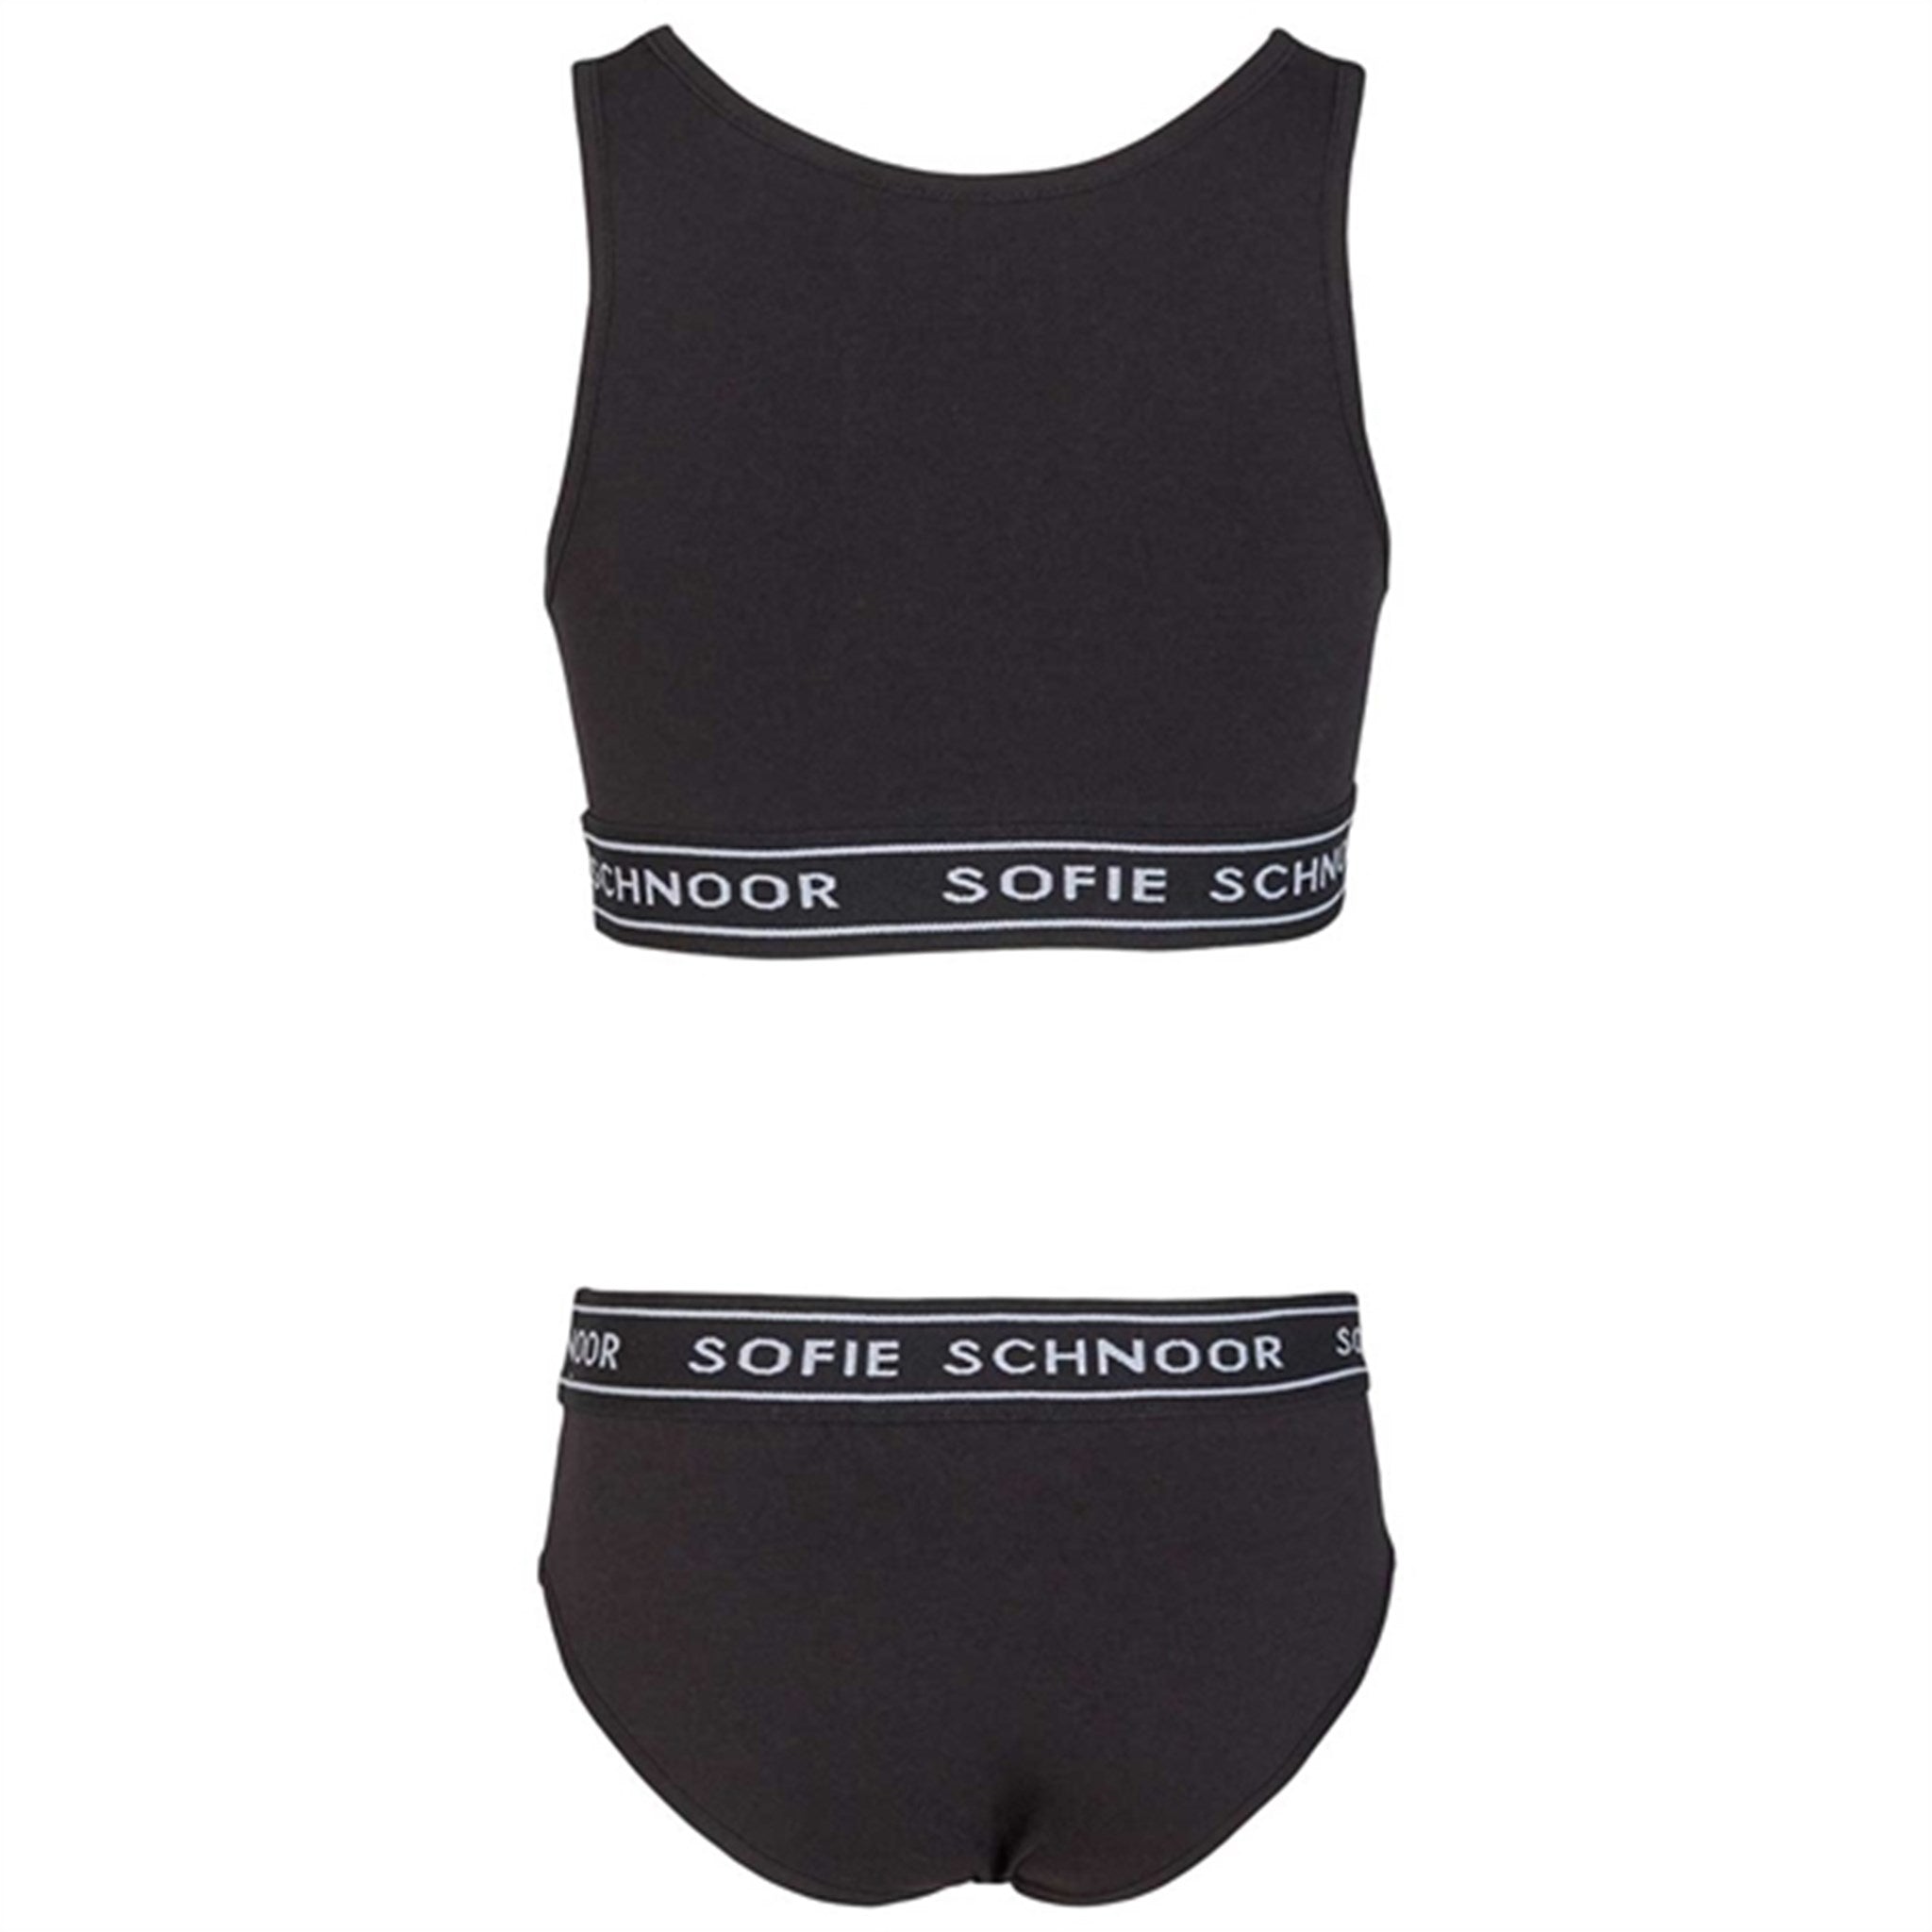 Sofie Schnoor Black Noos Underwear 2